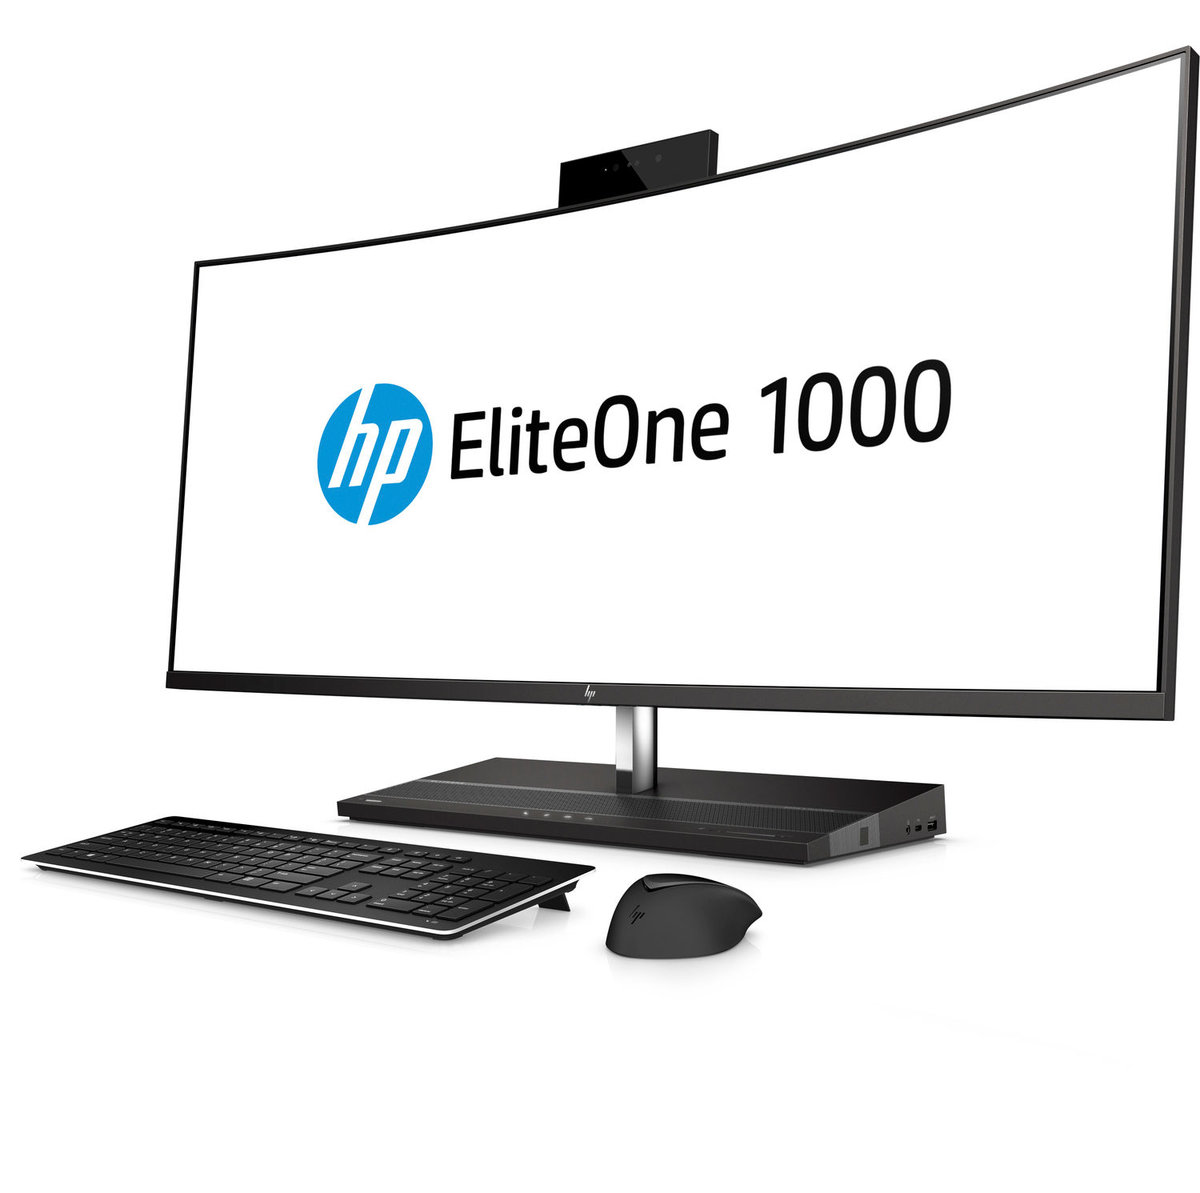 HP EliteOne 1000 G1